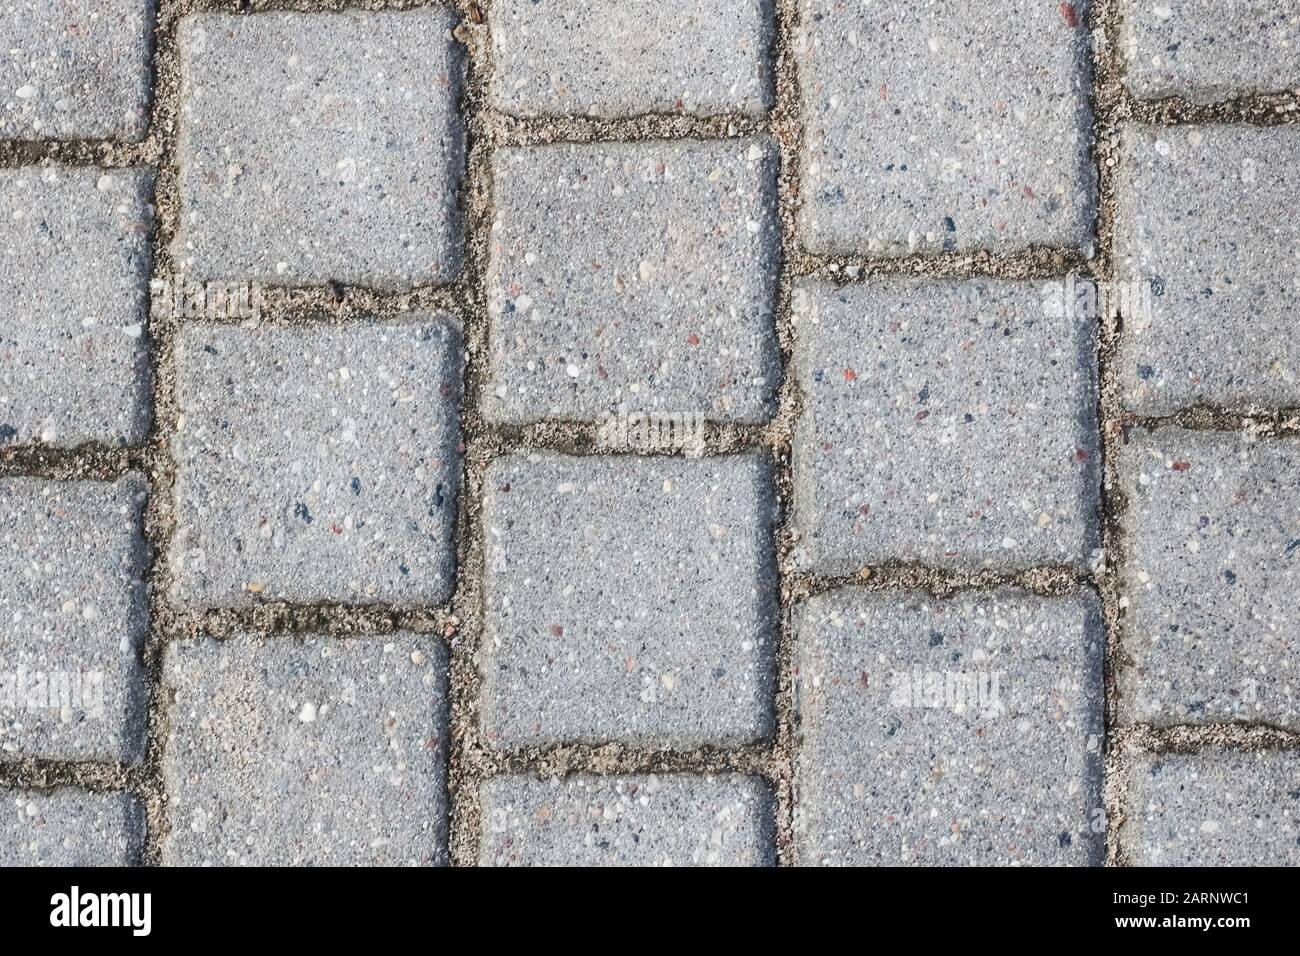 Placas de pavimento gris de hormigón para suelo o camino Fotografía de  stock - Alamy